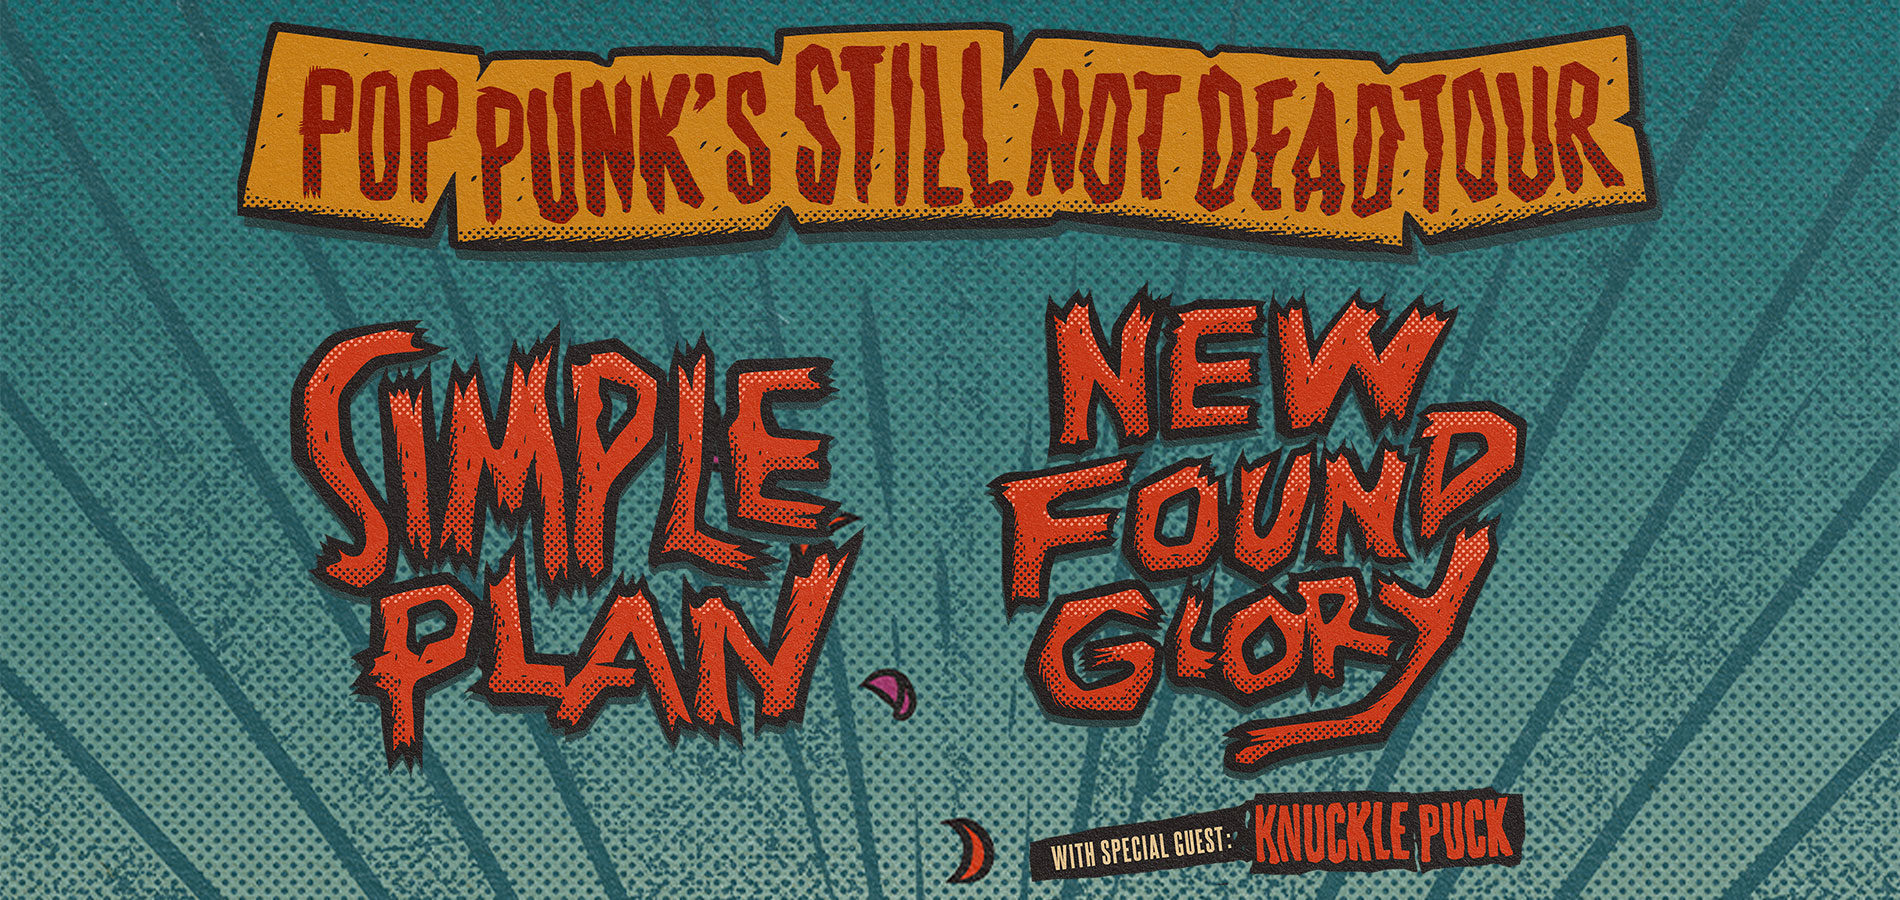 Simple Plan & New Found Glory – Pop Punk’s Still Not Dead Tour